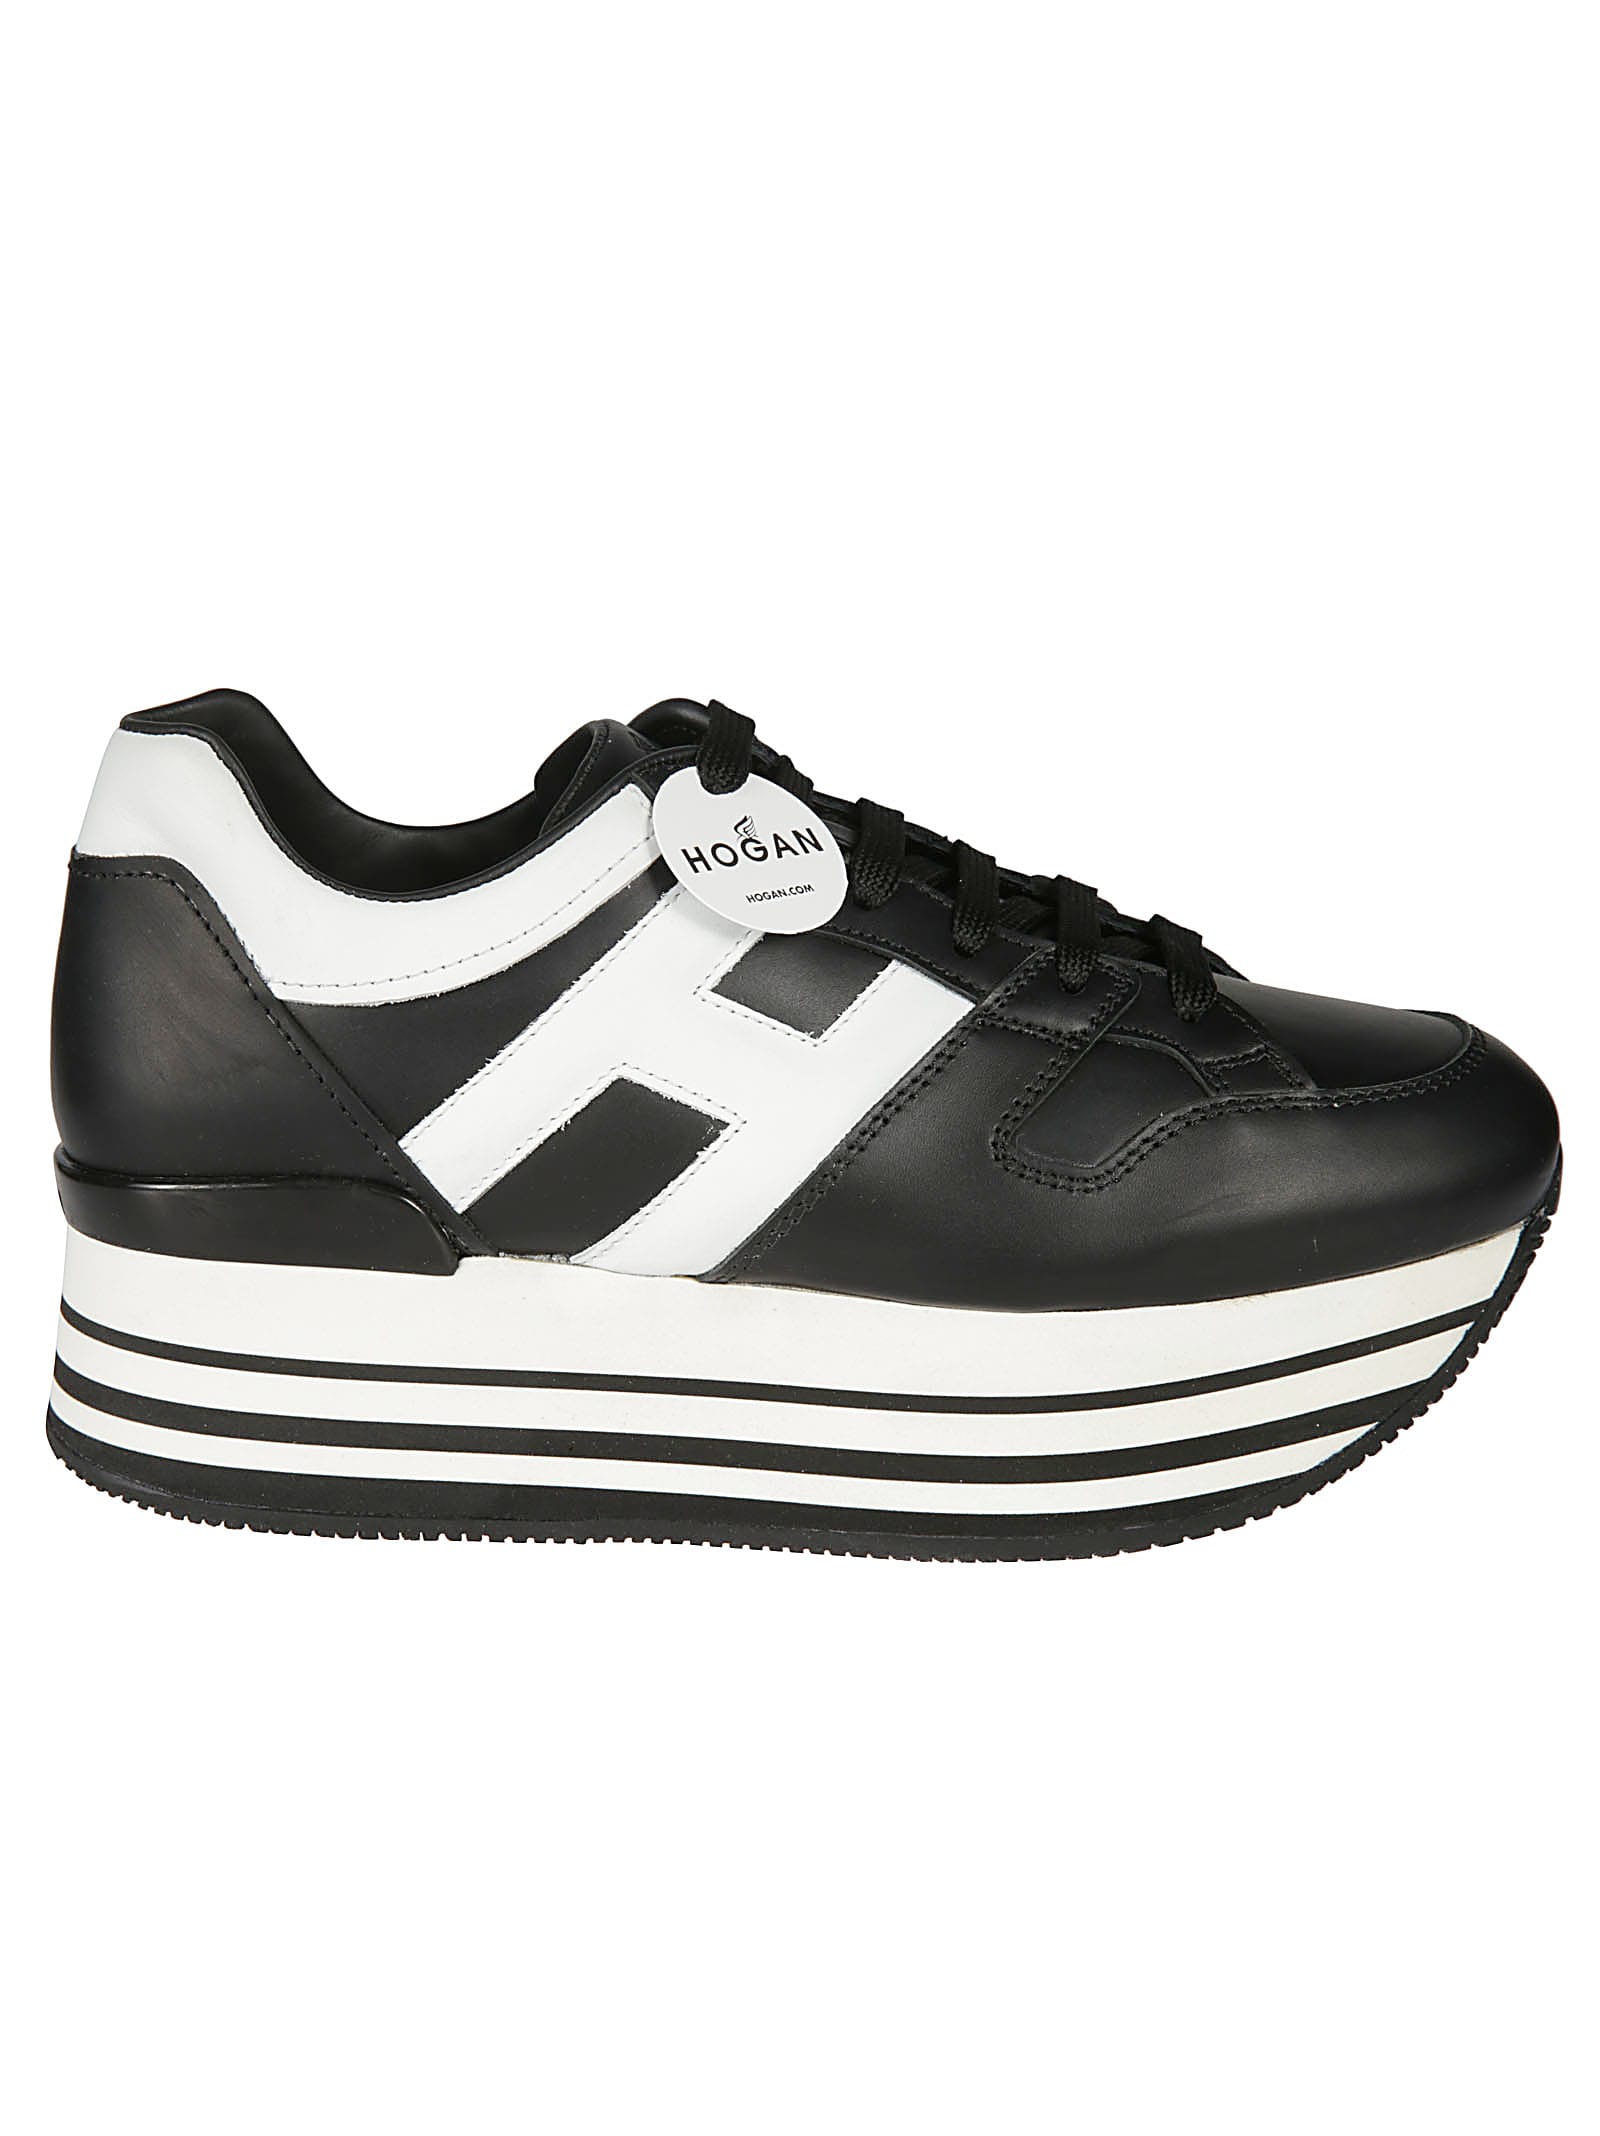 Hogan Hogan H283 Platform Sneakers - Nero/bianco - 10984992 | italist